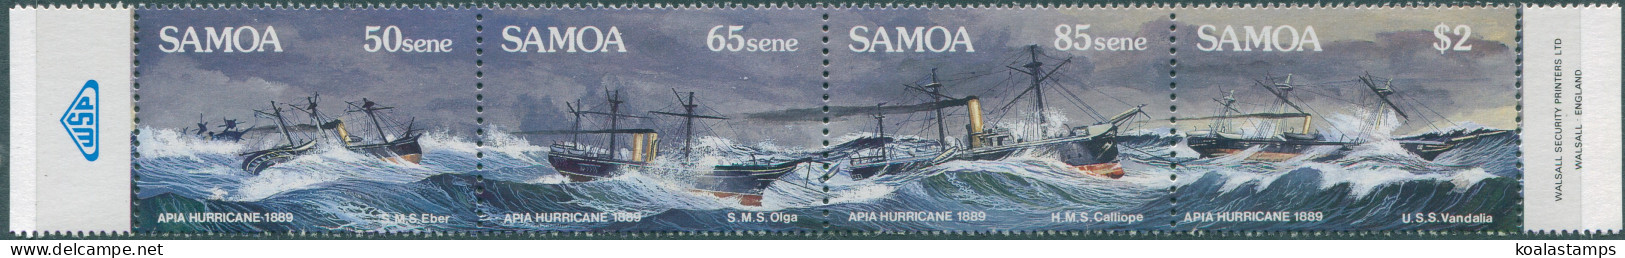 Samoa 1989 SG822-825 Apia Hurricane Set MNH - Samoa (Staat)